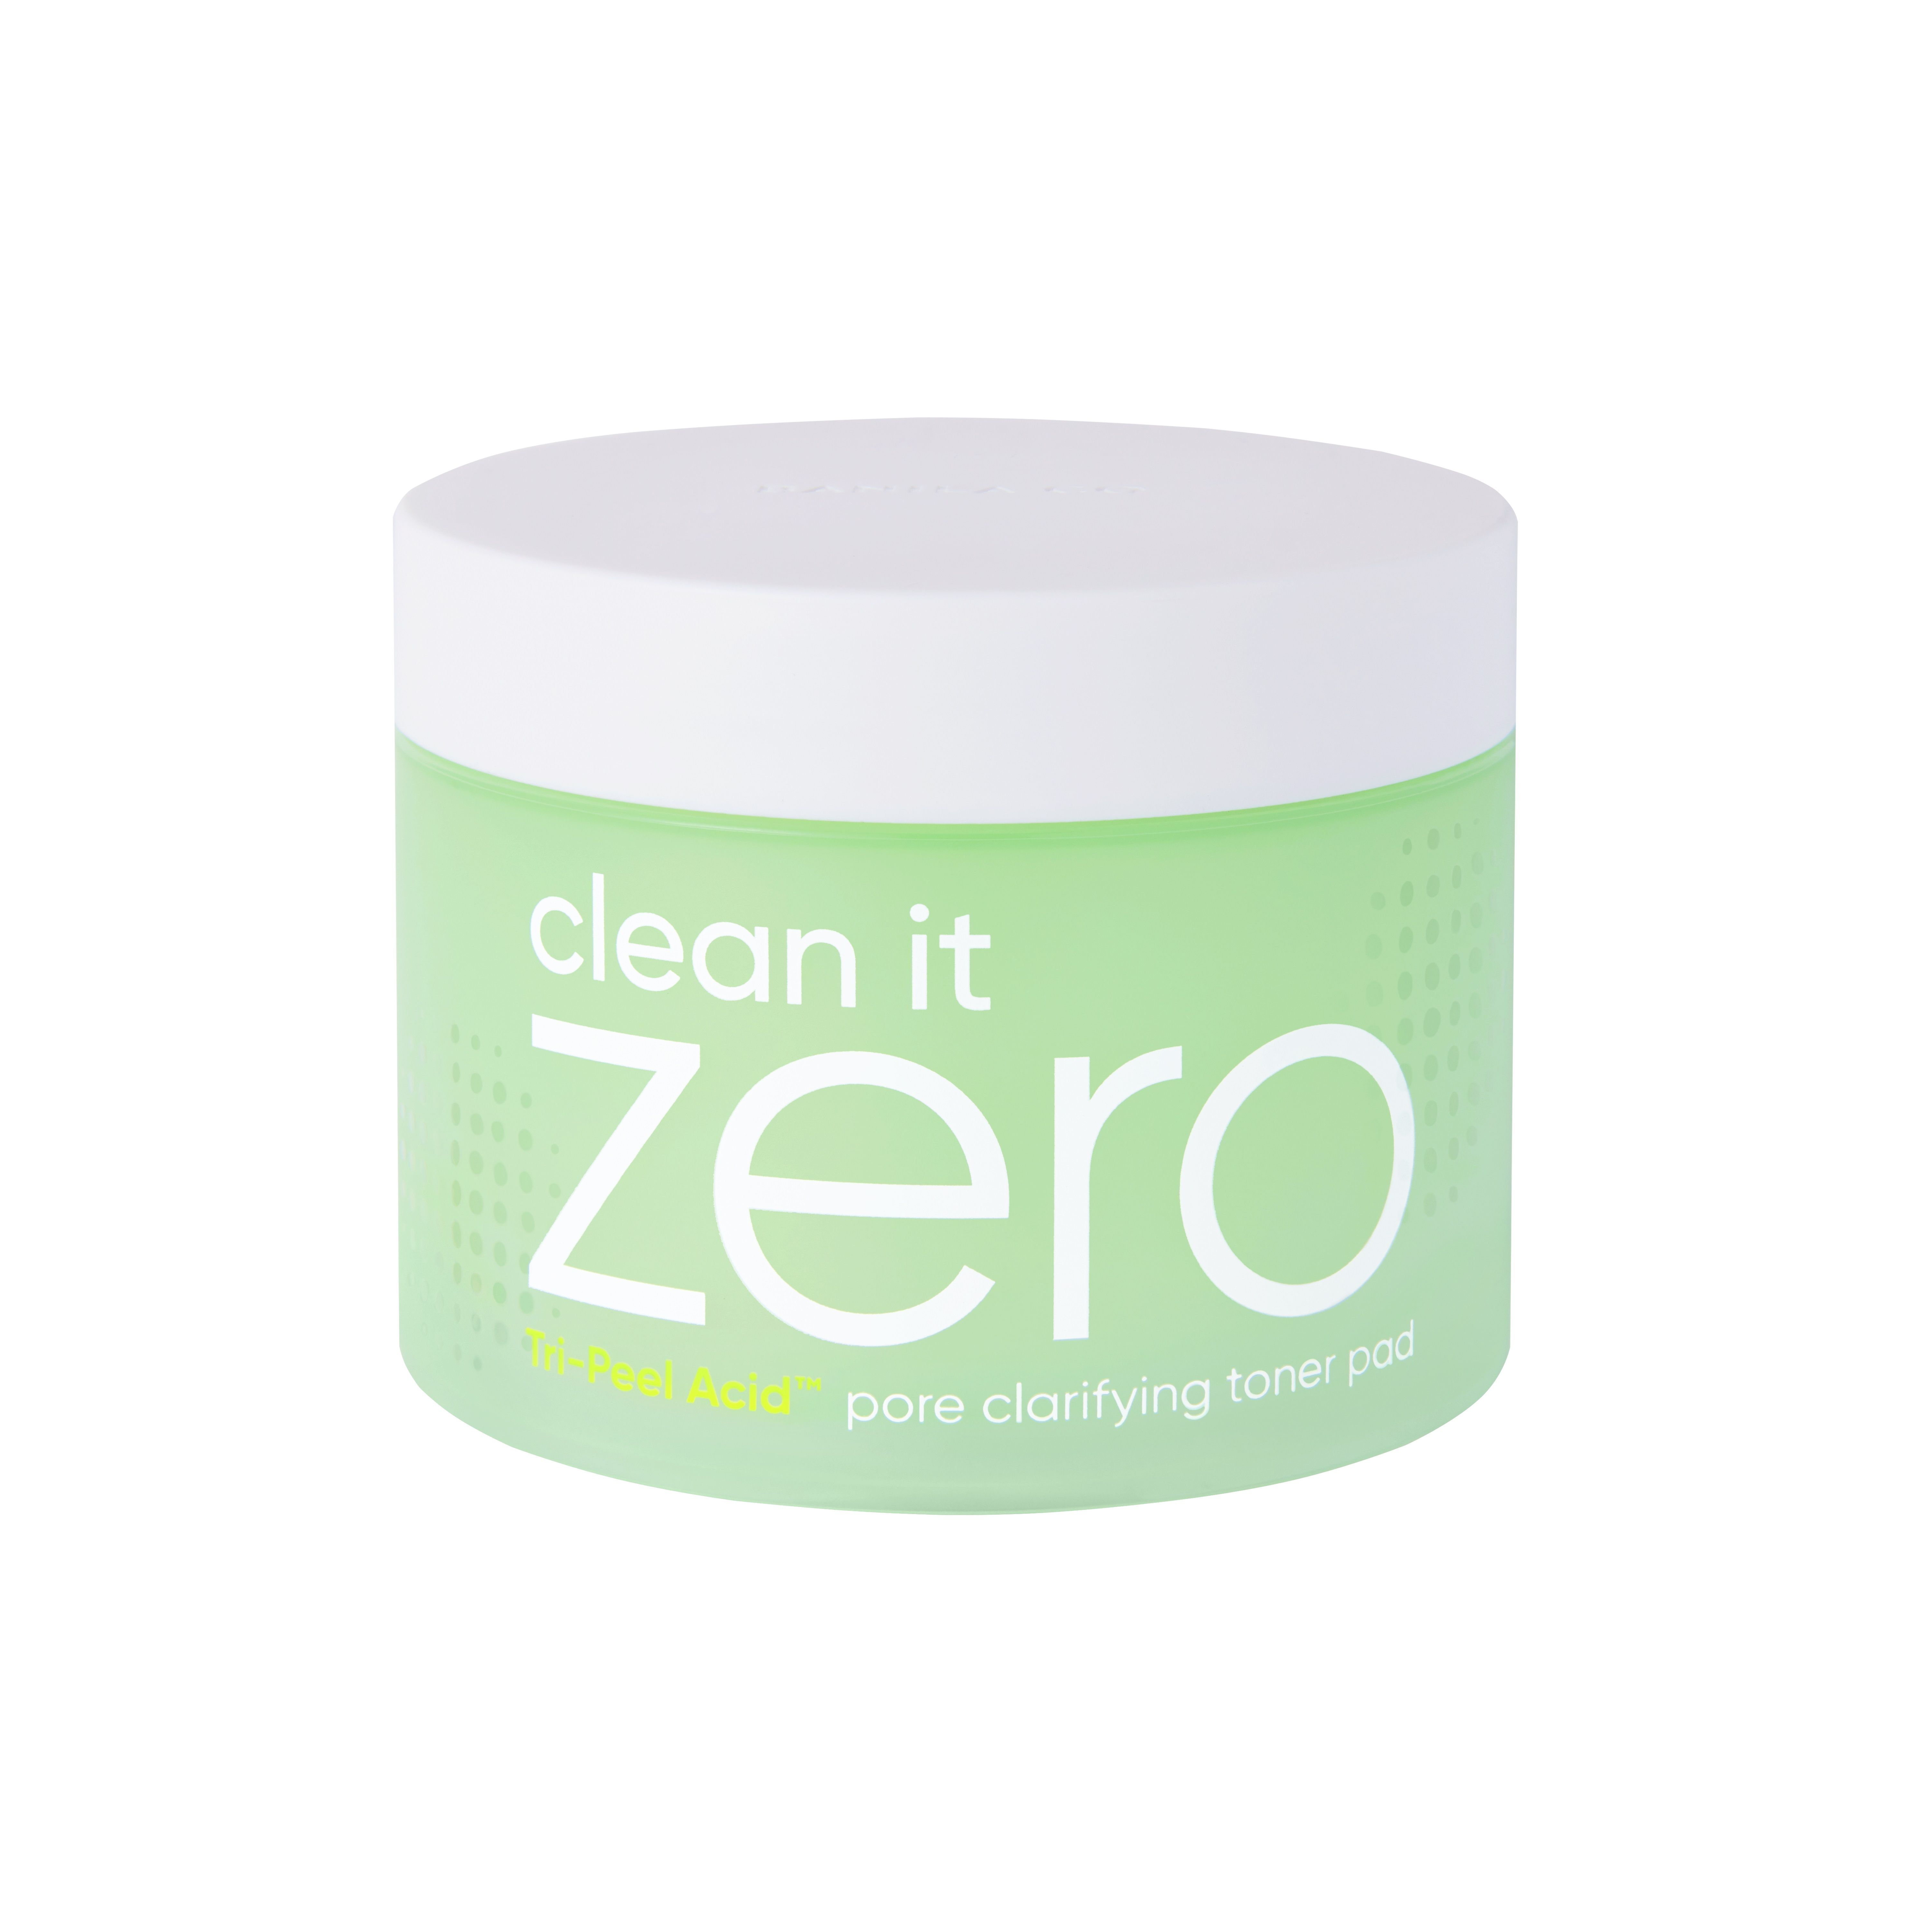 Banila Co Clean It Zero Toner Pad Pore Clarifying 120 ml  60 pads